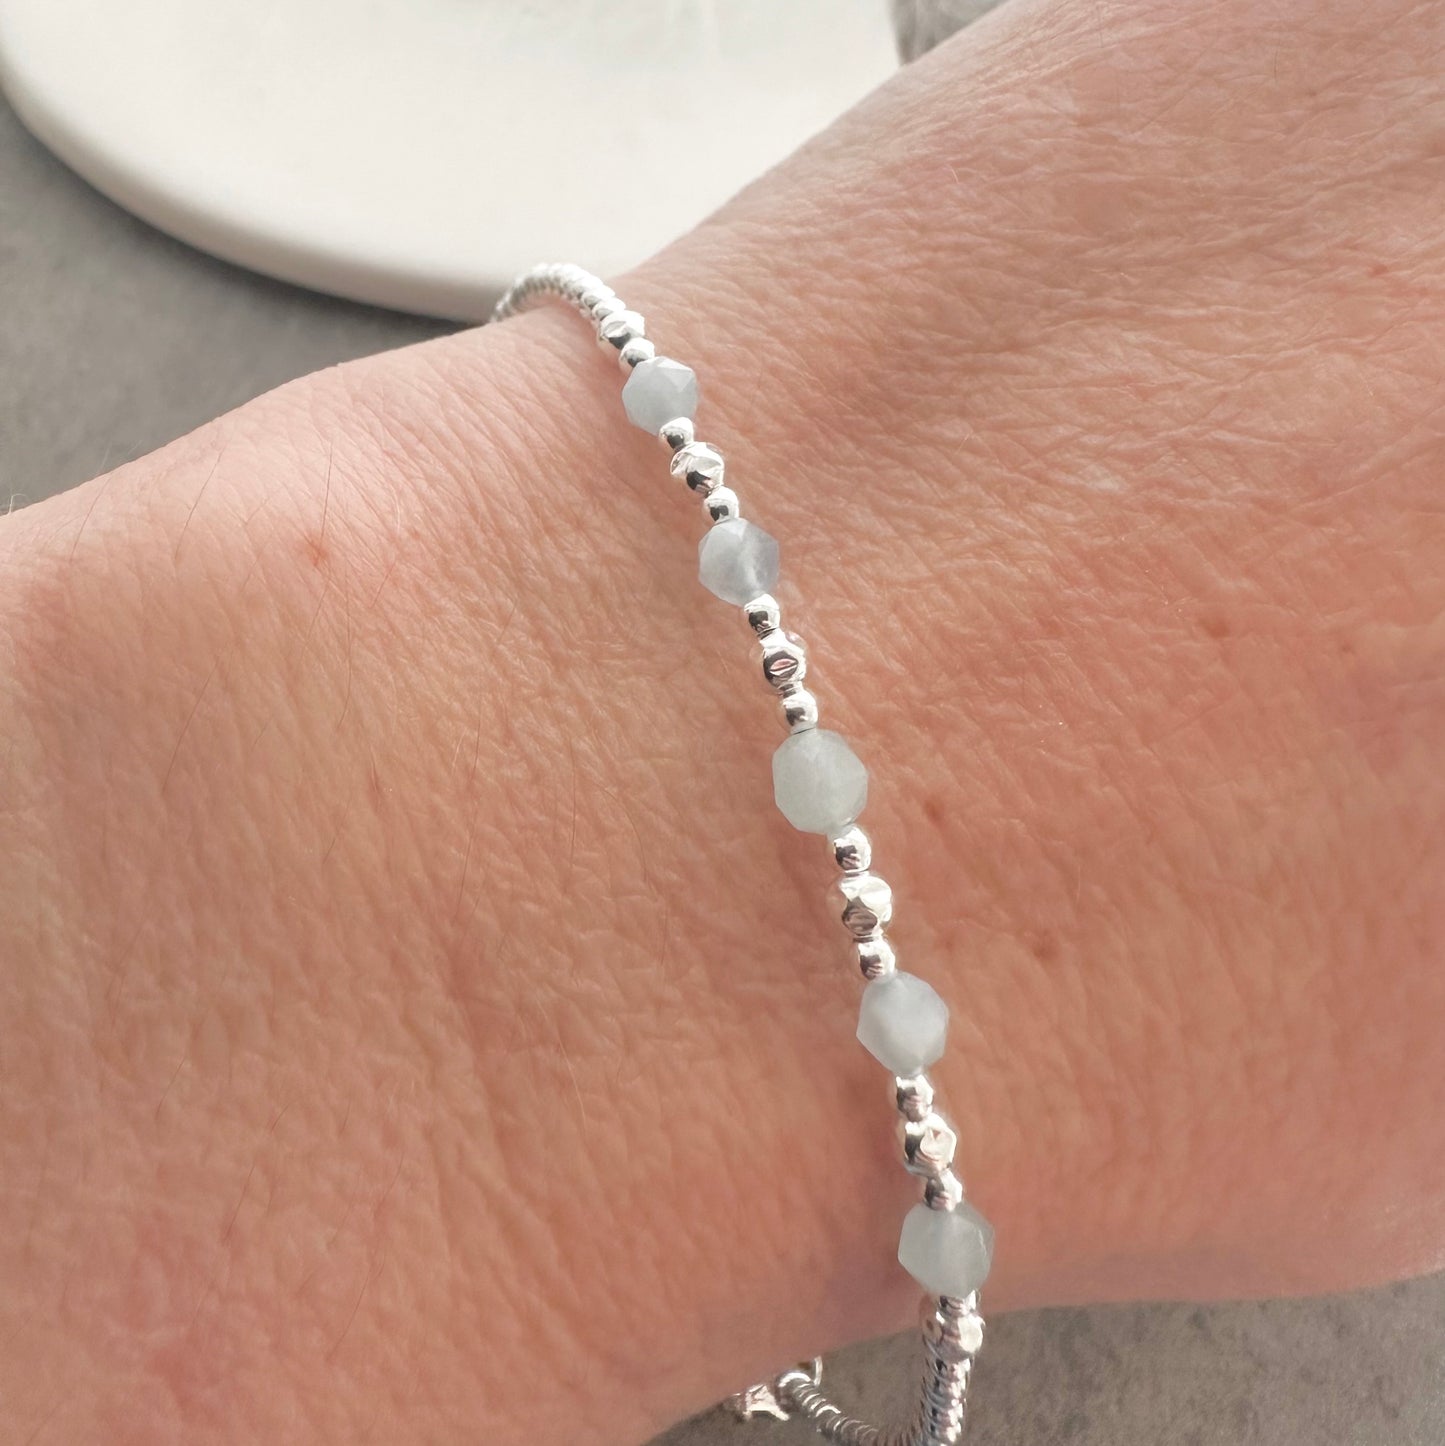 Aquamarine Bracelet the March Birthstone sterling silver bracelet birthday gift for women nft